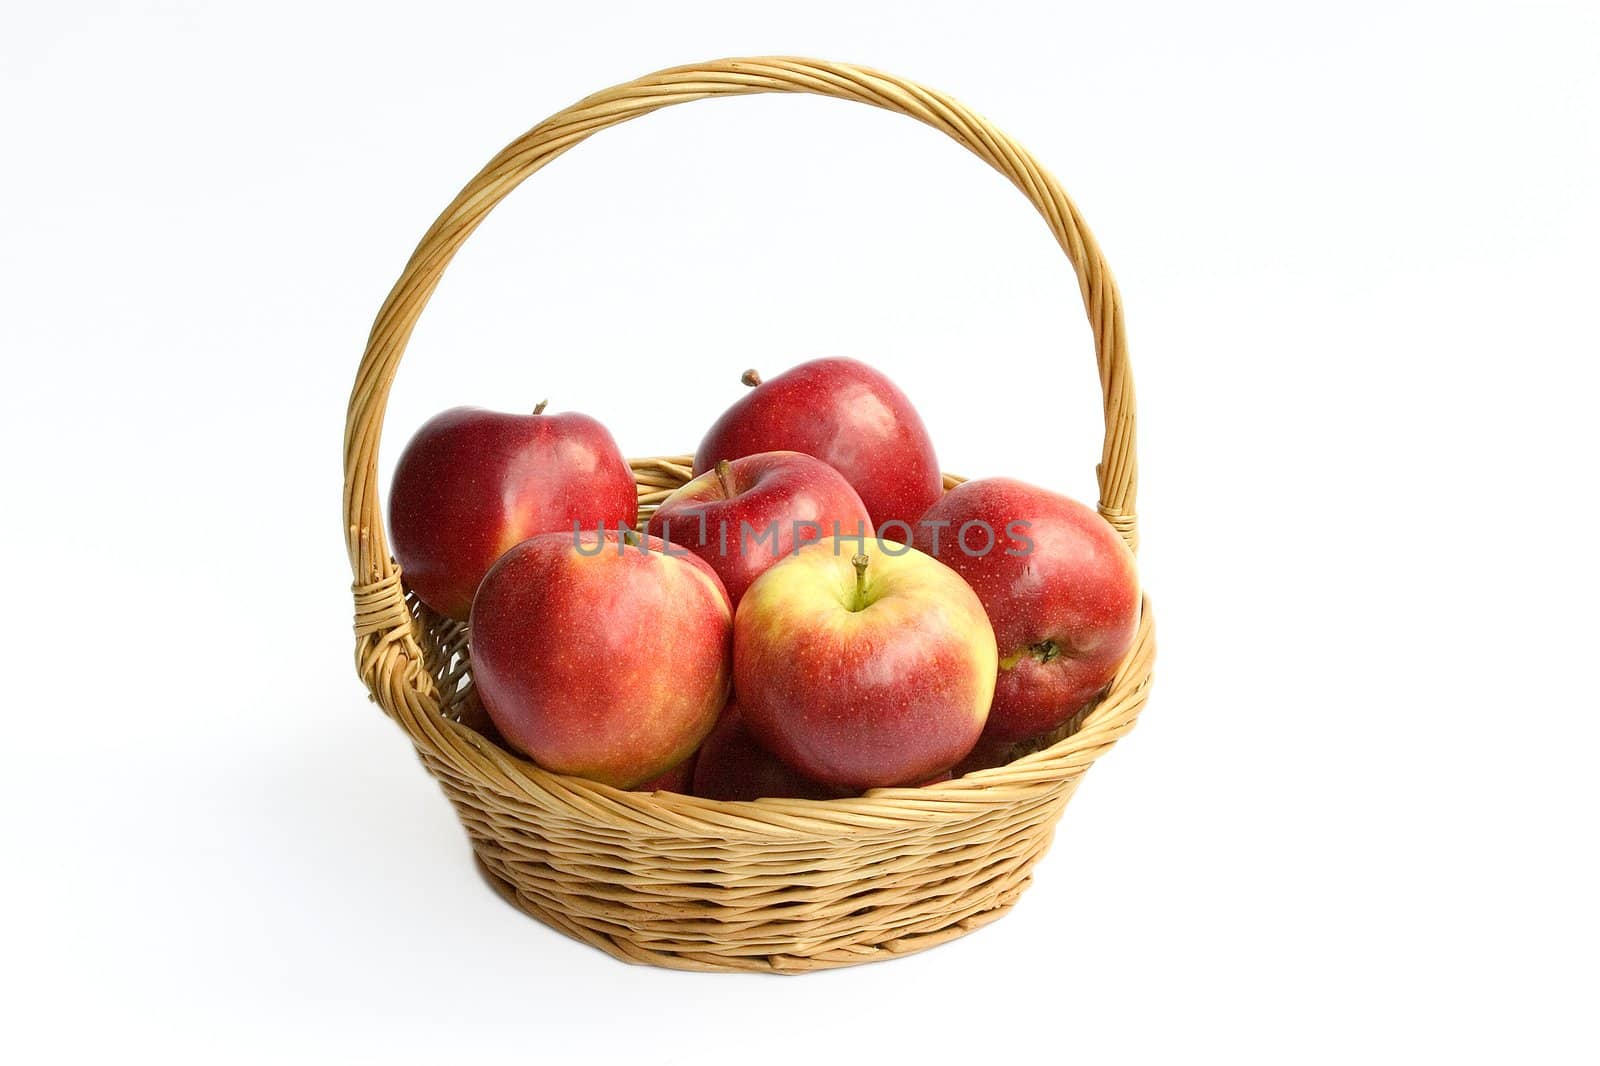 Apples in a basket by miradrozdowski